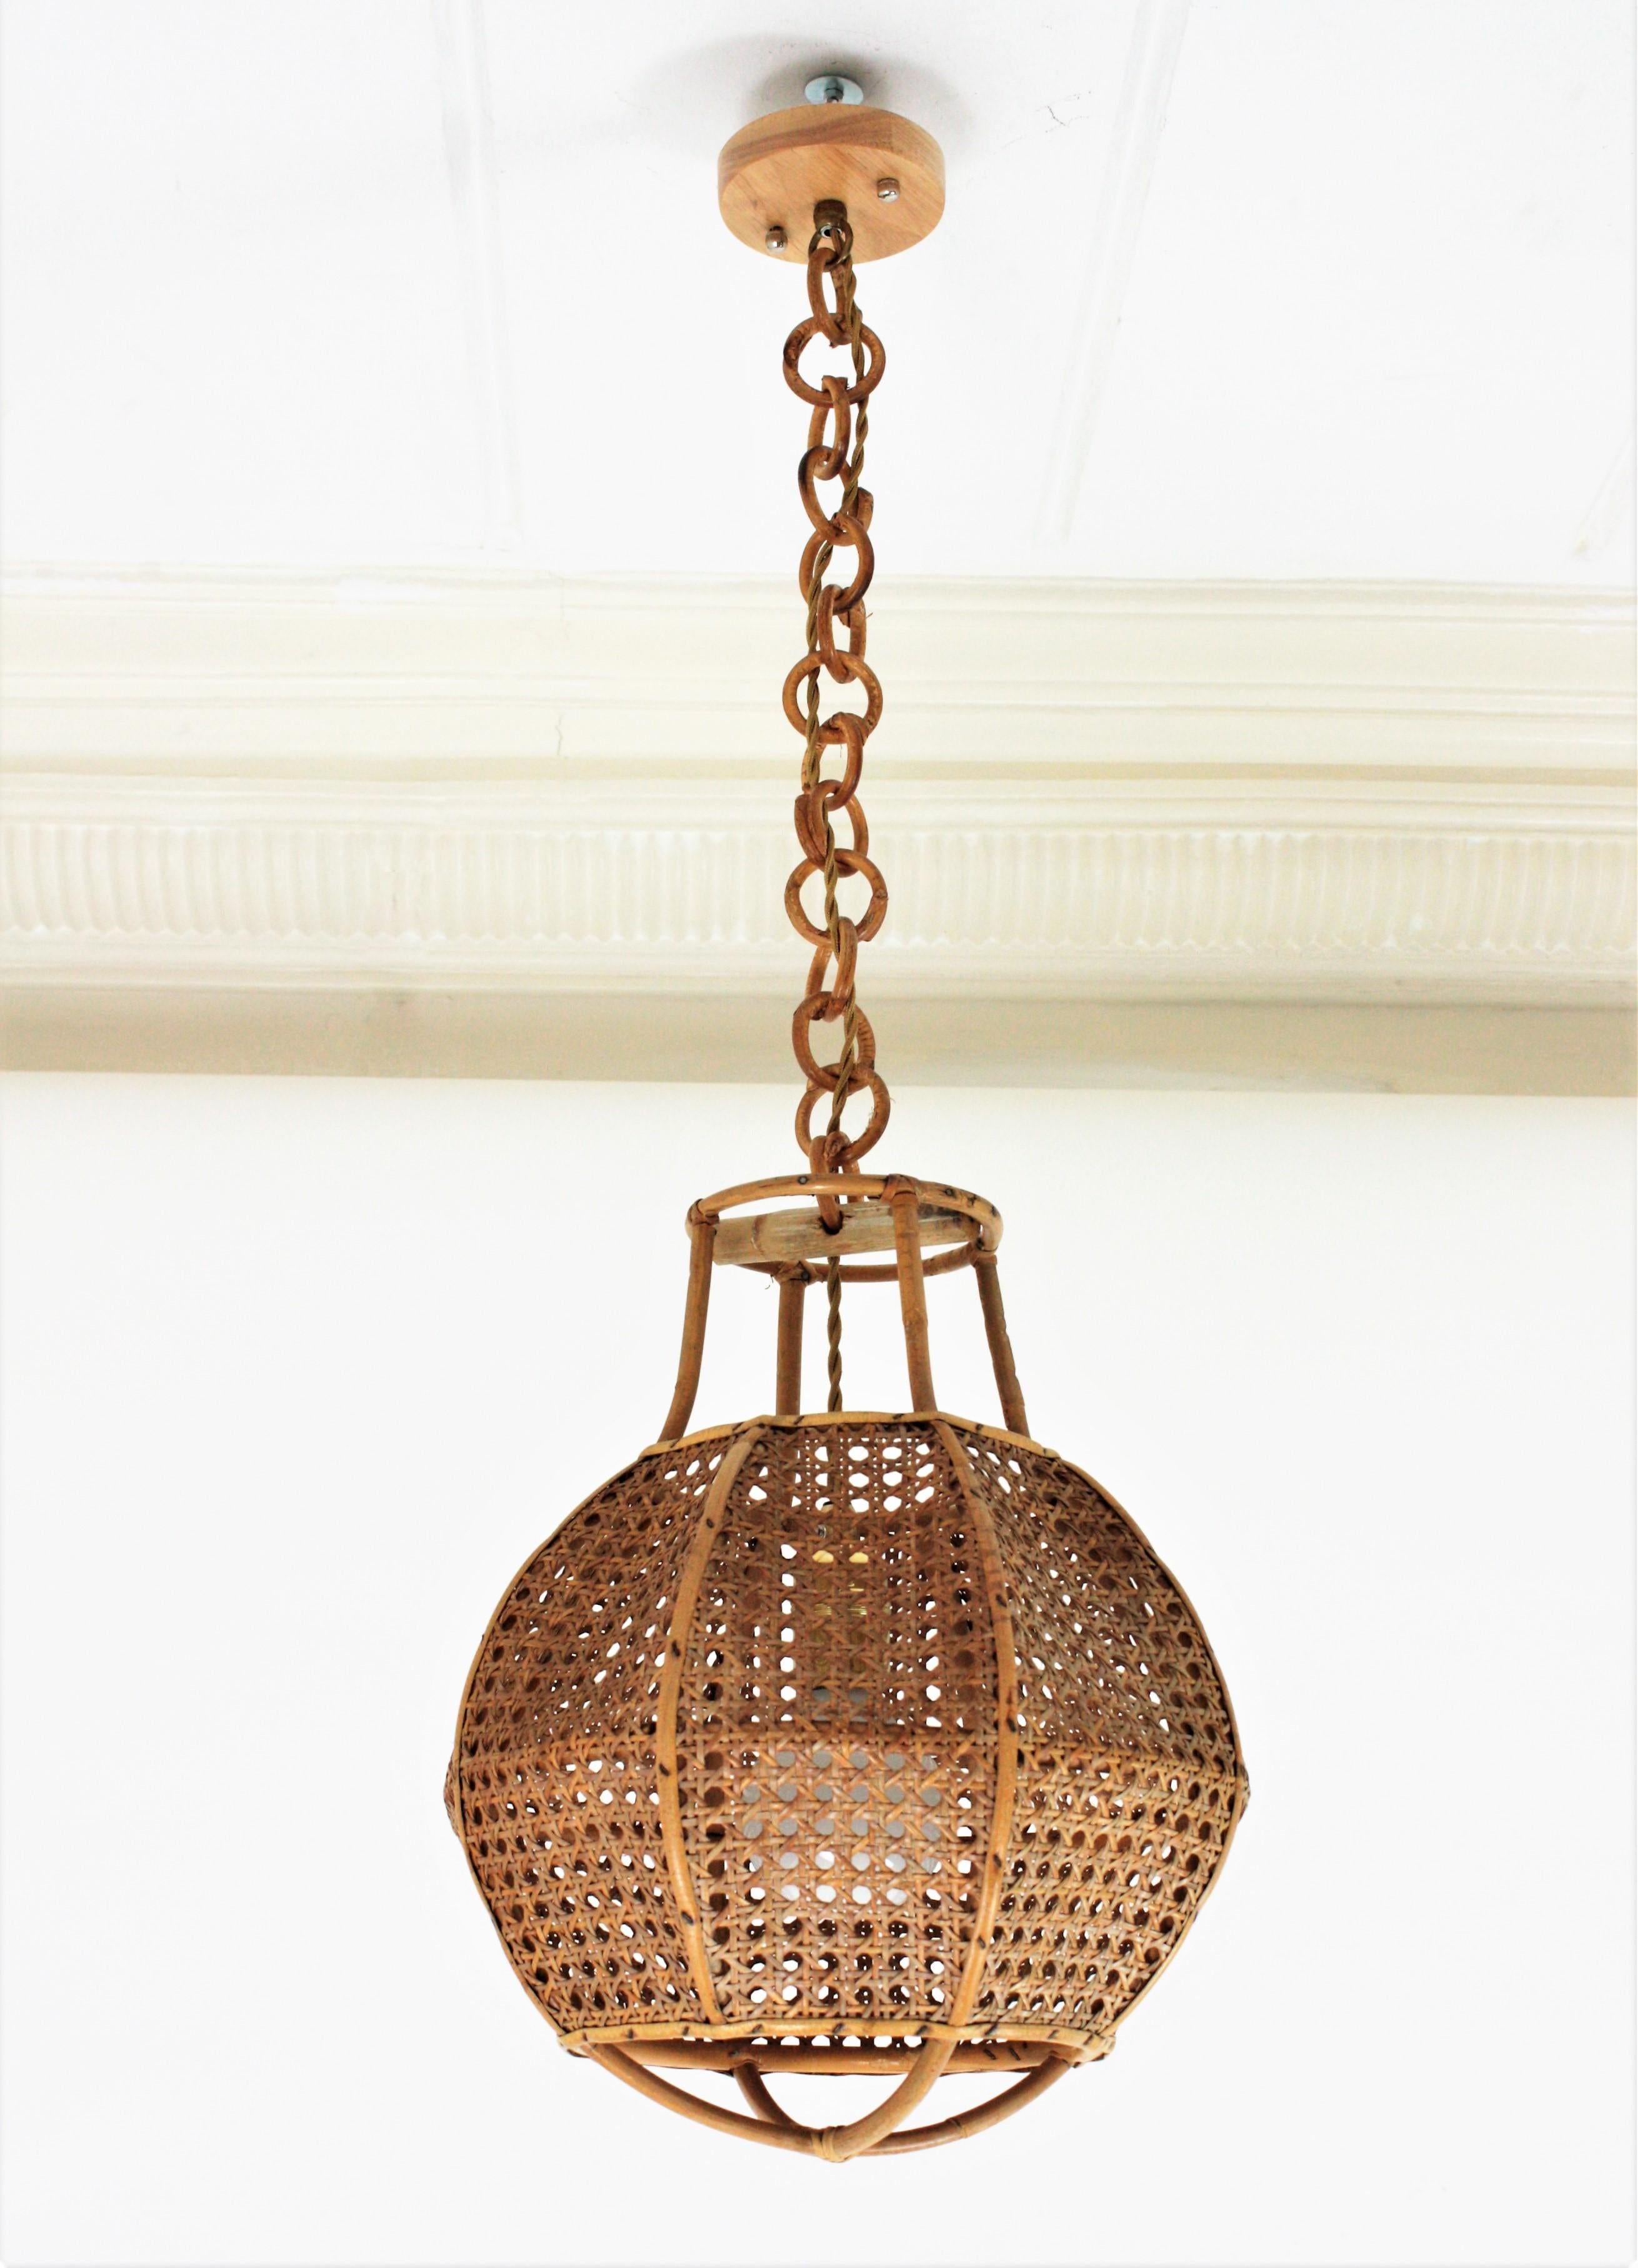 Woven Italian Modernist Wicker Wire and Rattan Globe Pendant / Hanging Light, 1950s